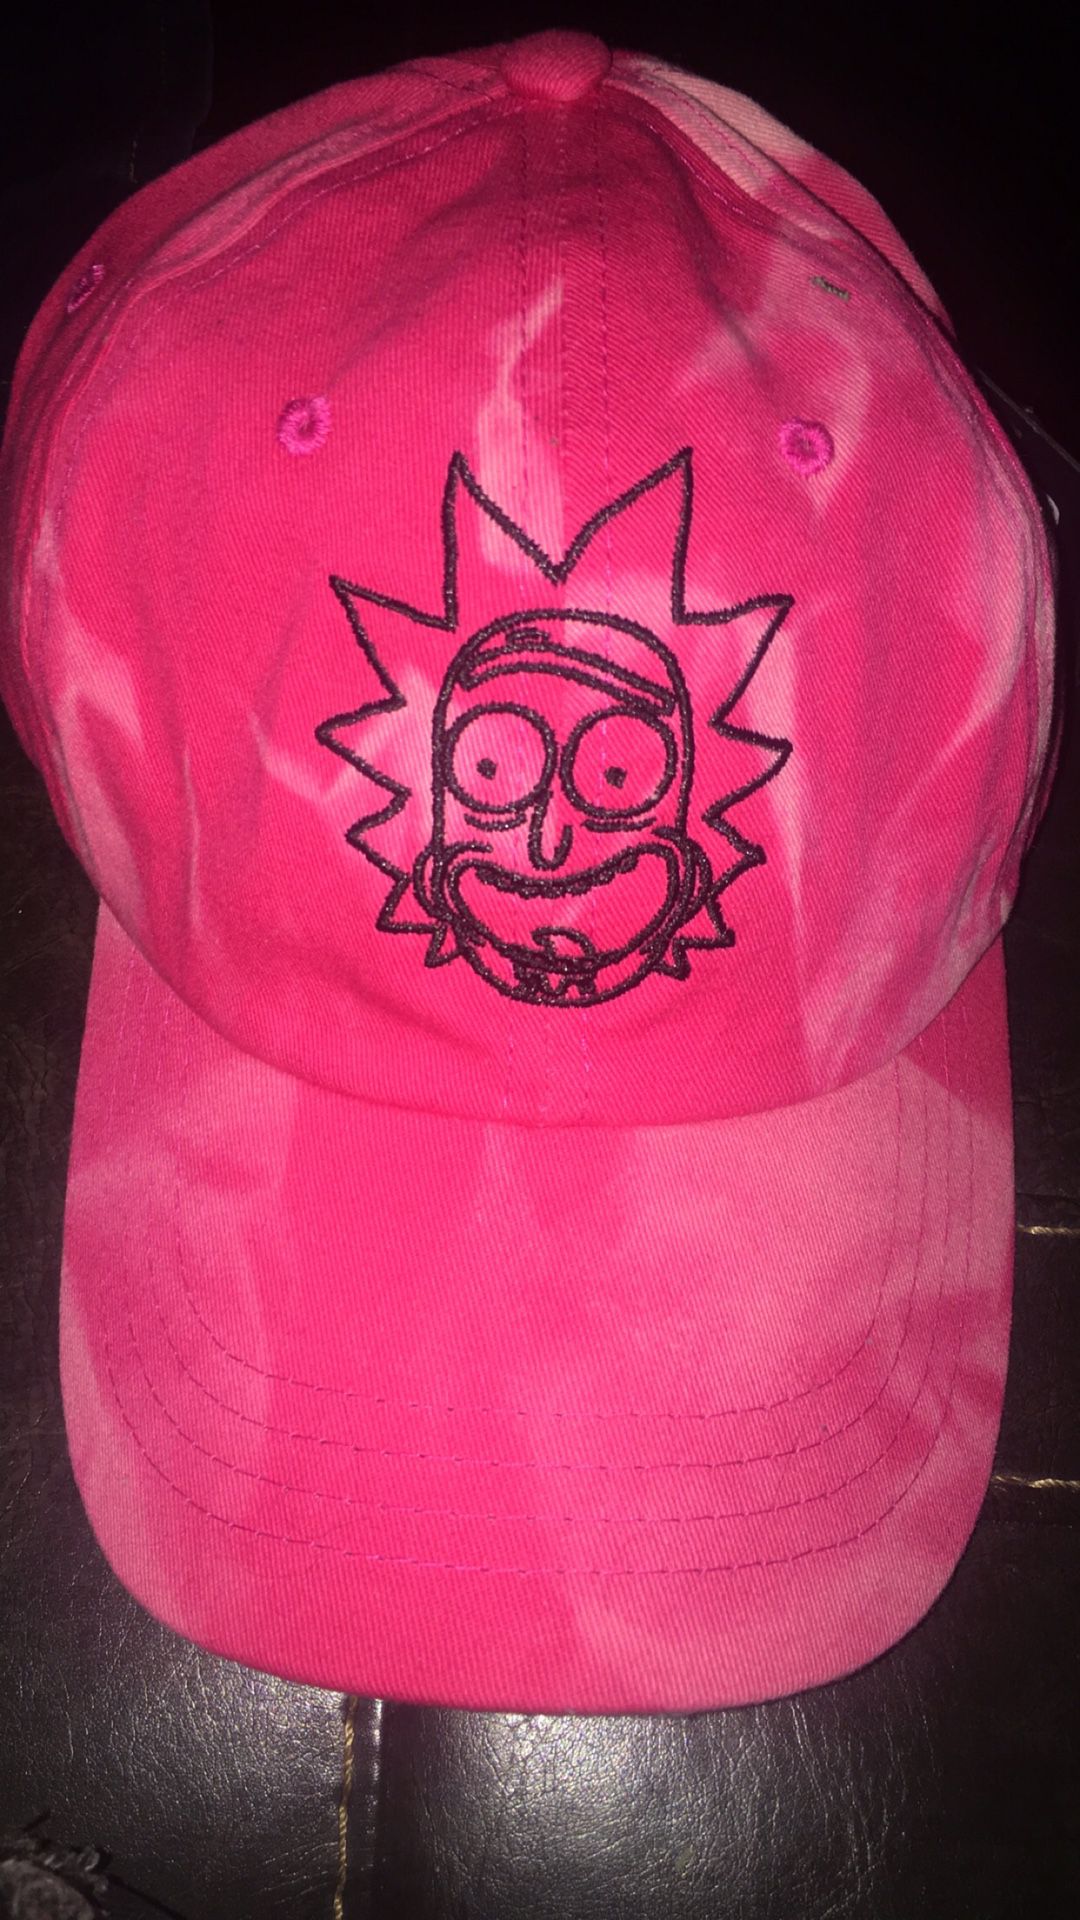 Pink hat